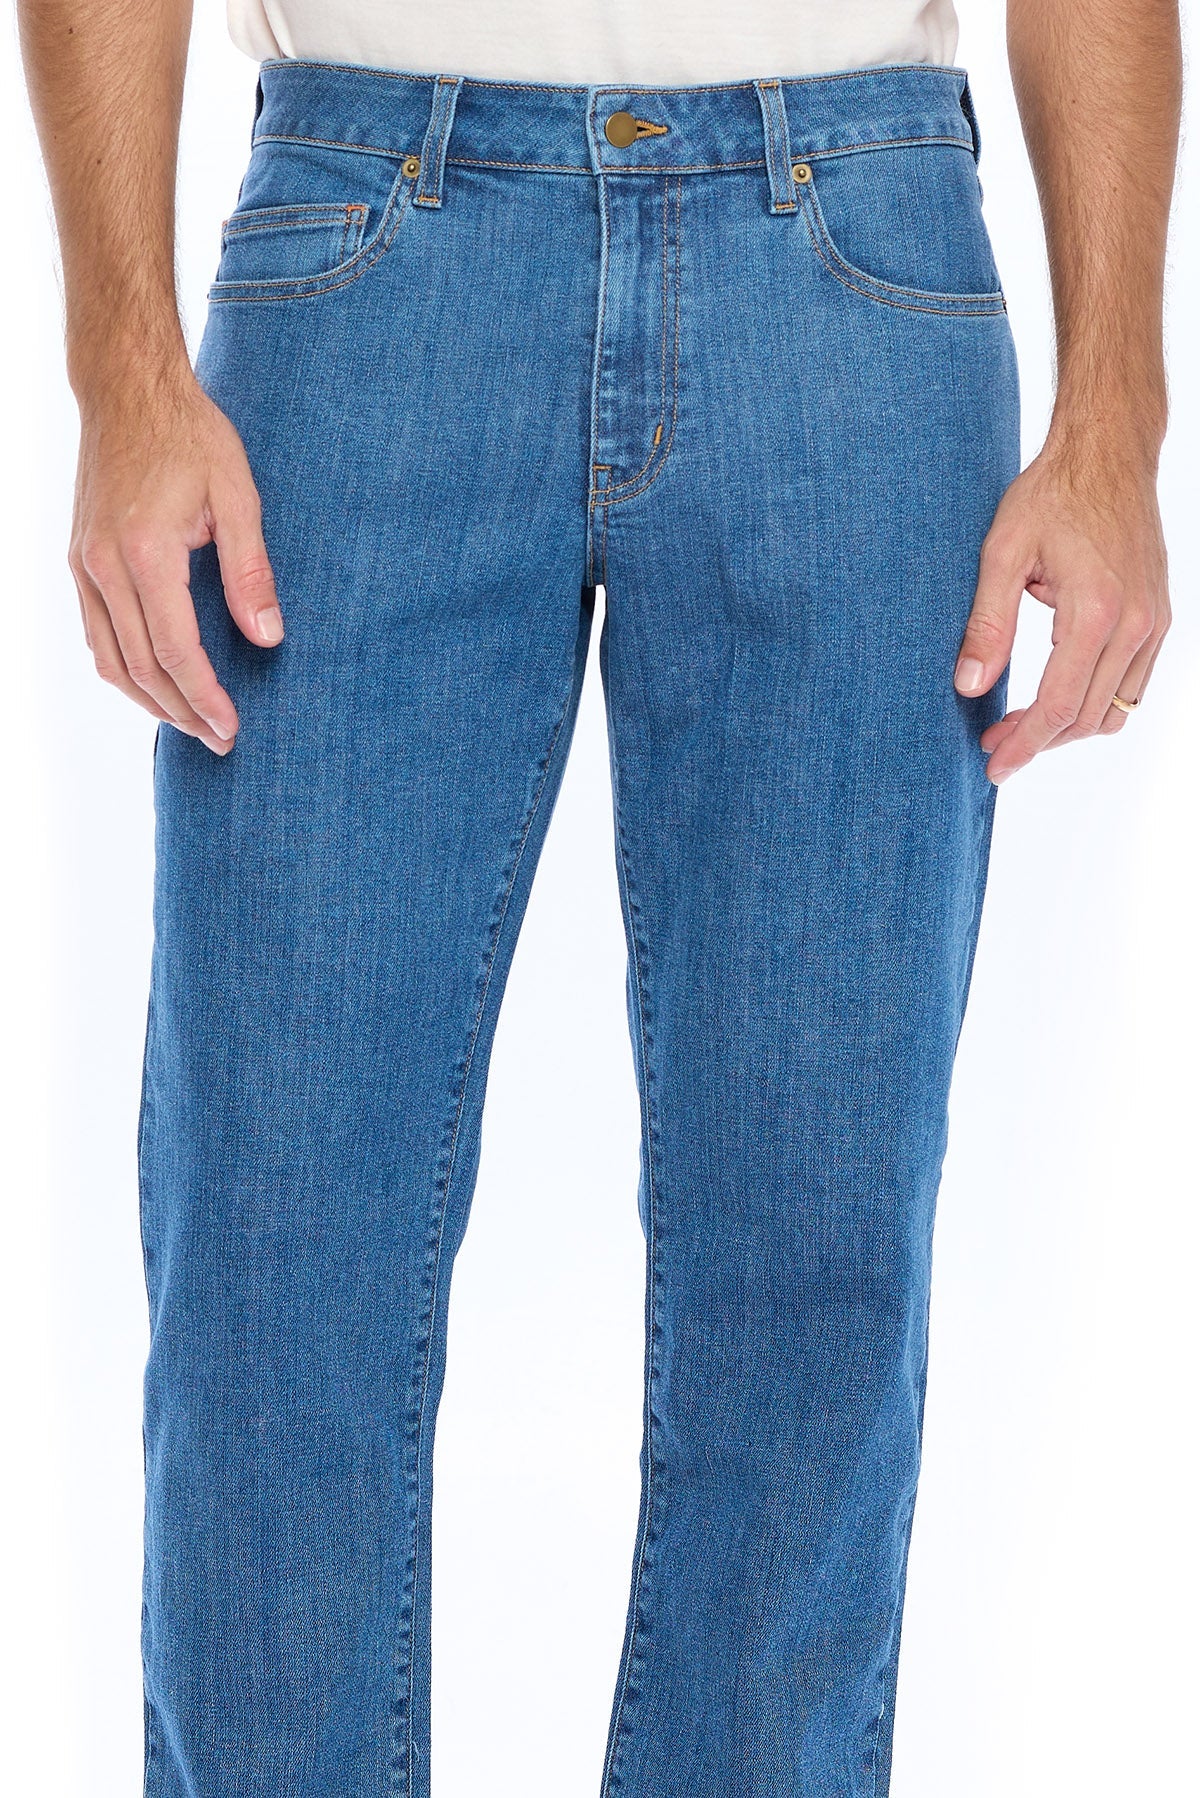 Model wearing the Aviator fly light 5 pocket travel jeans.